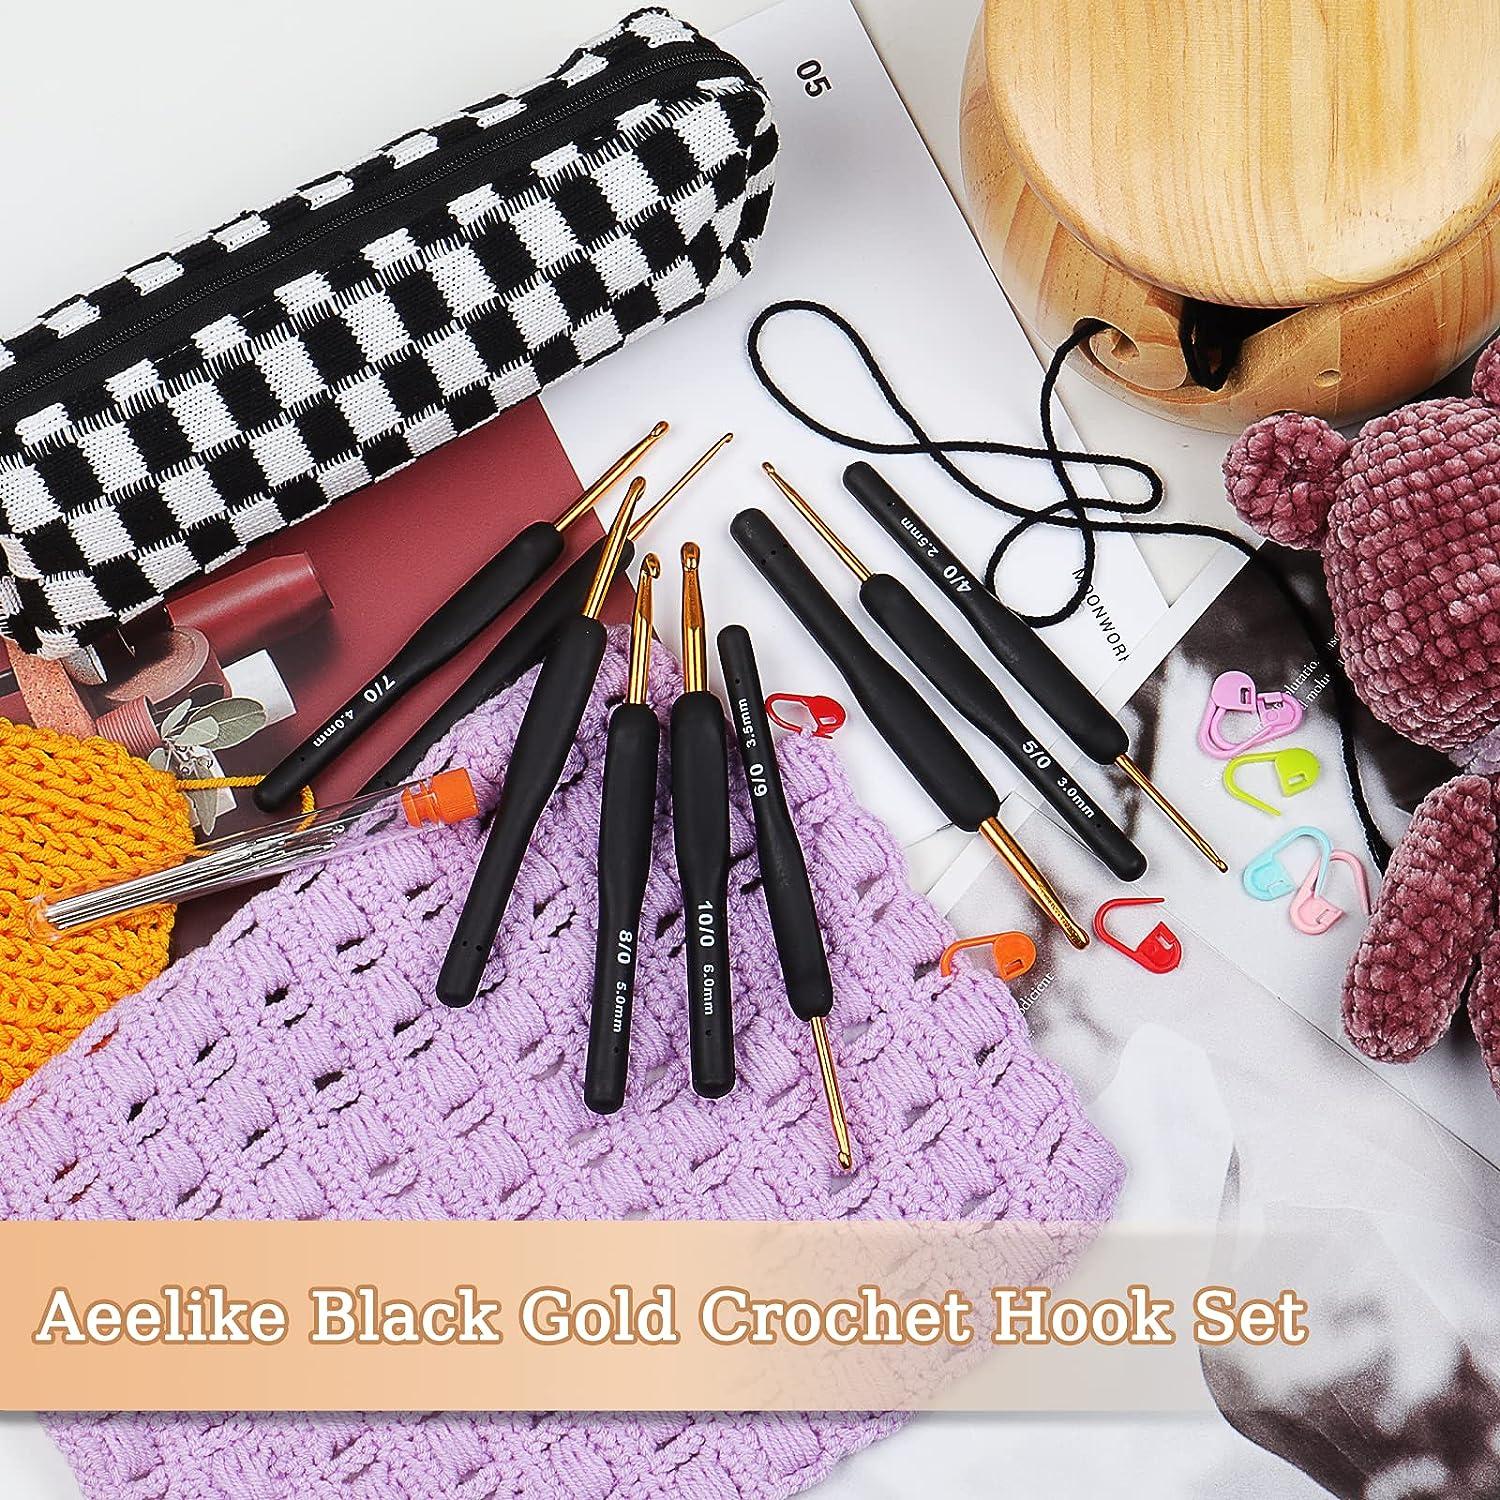  Aeelike Tunisian Crochet Kit for Beginners Adults, Starter  Afghan Crochet Hooks Kit with Yarn, 11pcs 2mm to 8mm Aluminum Afghan Hooks  Craft Set and Crochet Accessories Storage Bag, Blue Flower